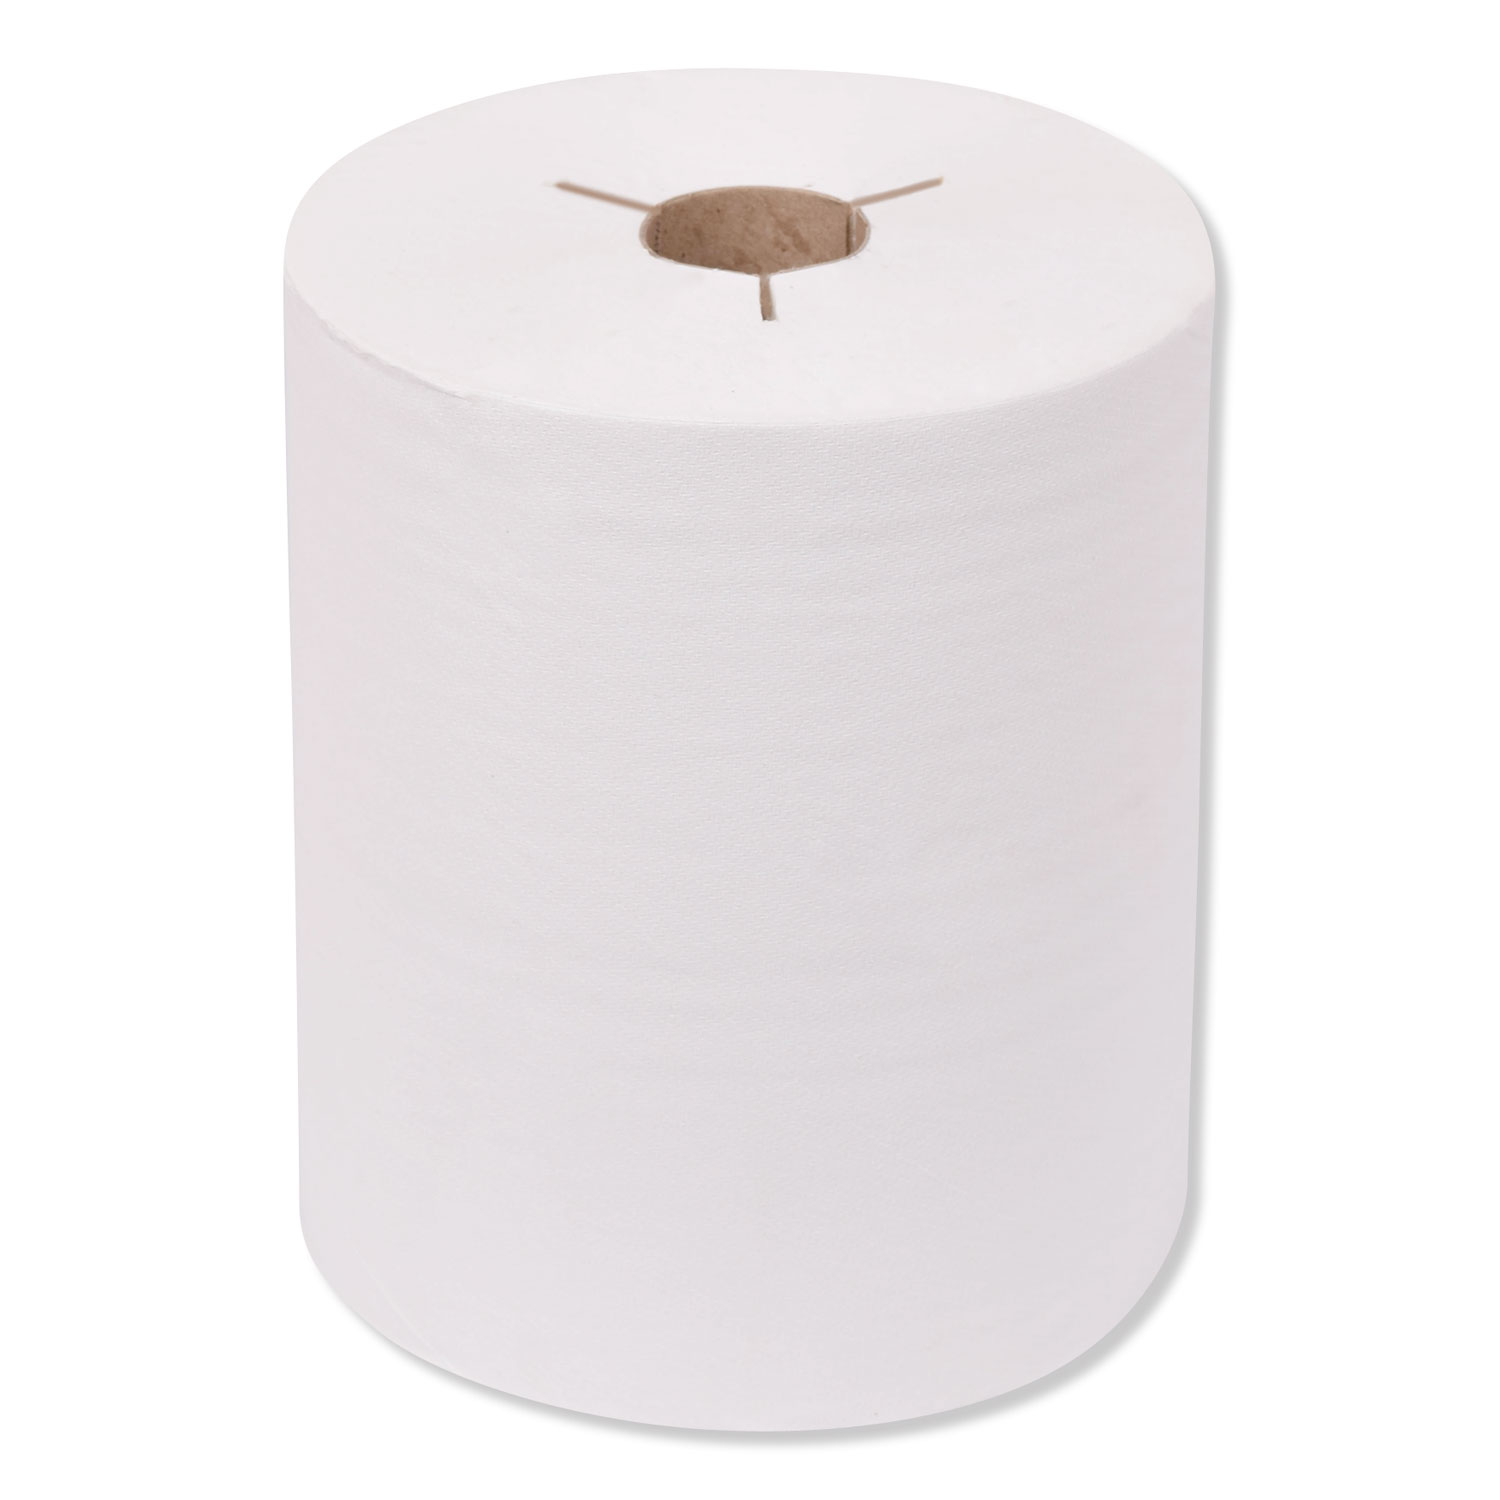  Tork 8634540 Advanced Hand Towel Roll, Notched, 1-Ply, 8 x 11, White, 491/Roll, 12 Rolls/Carton (TRK8634540) 